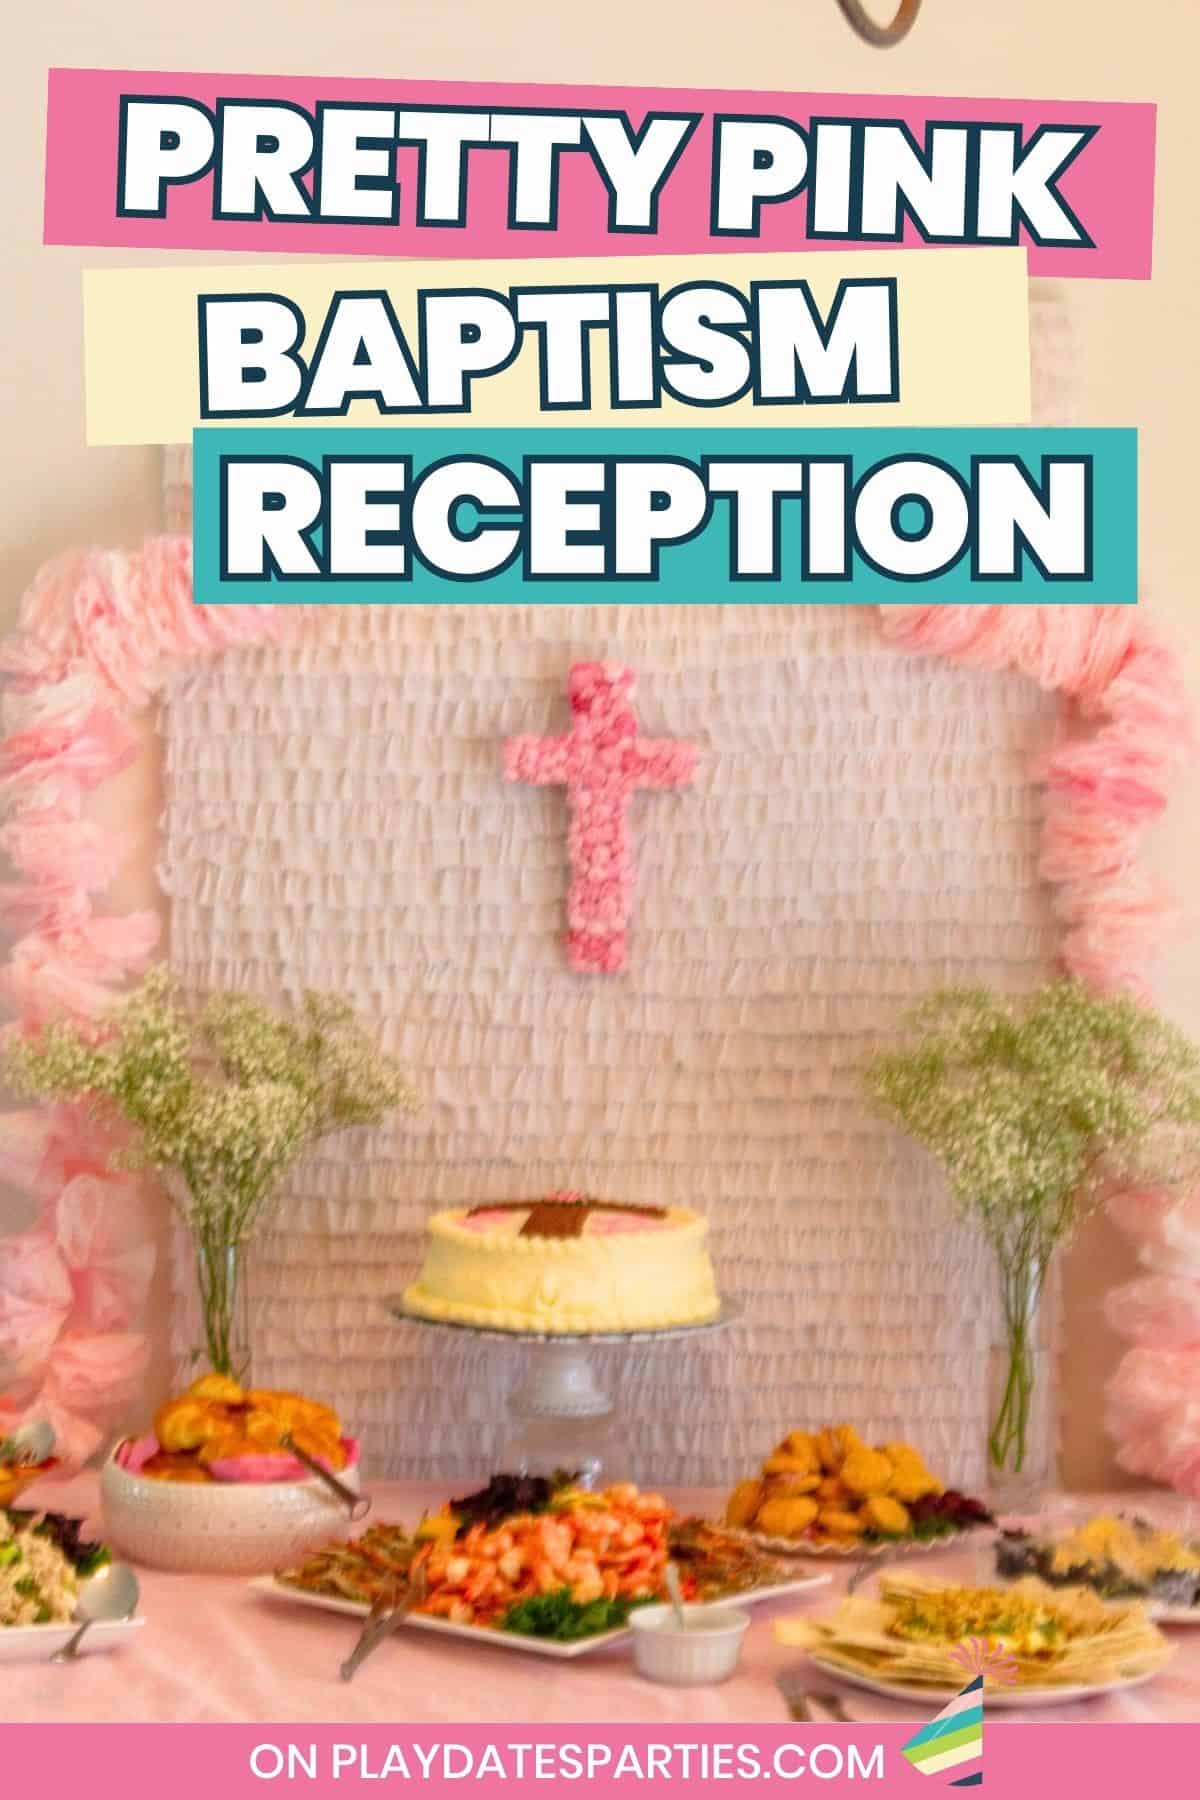 Pretty Pink Baptism Reception Pin Image.